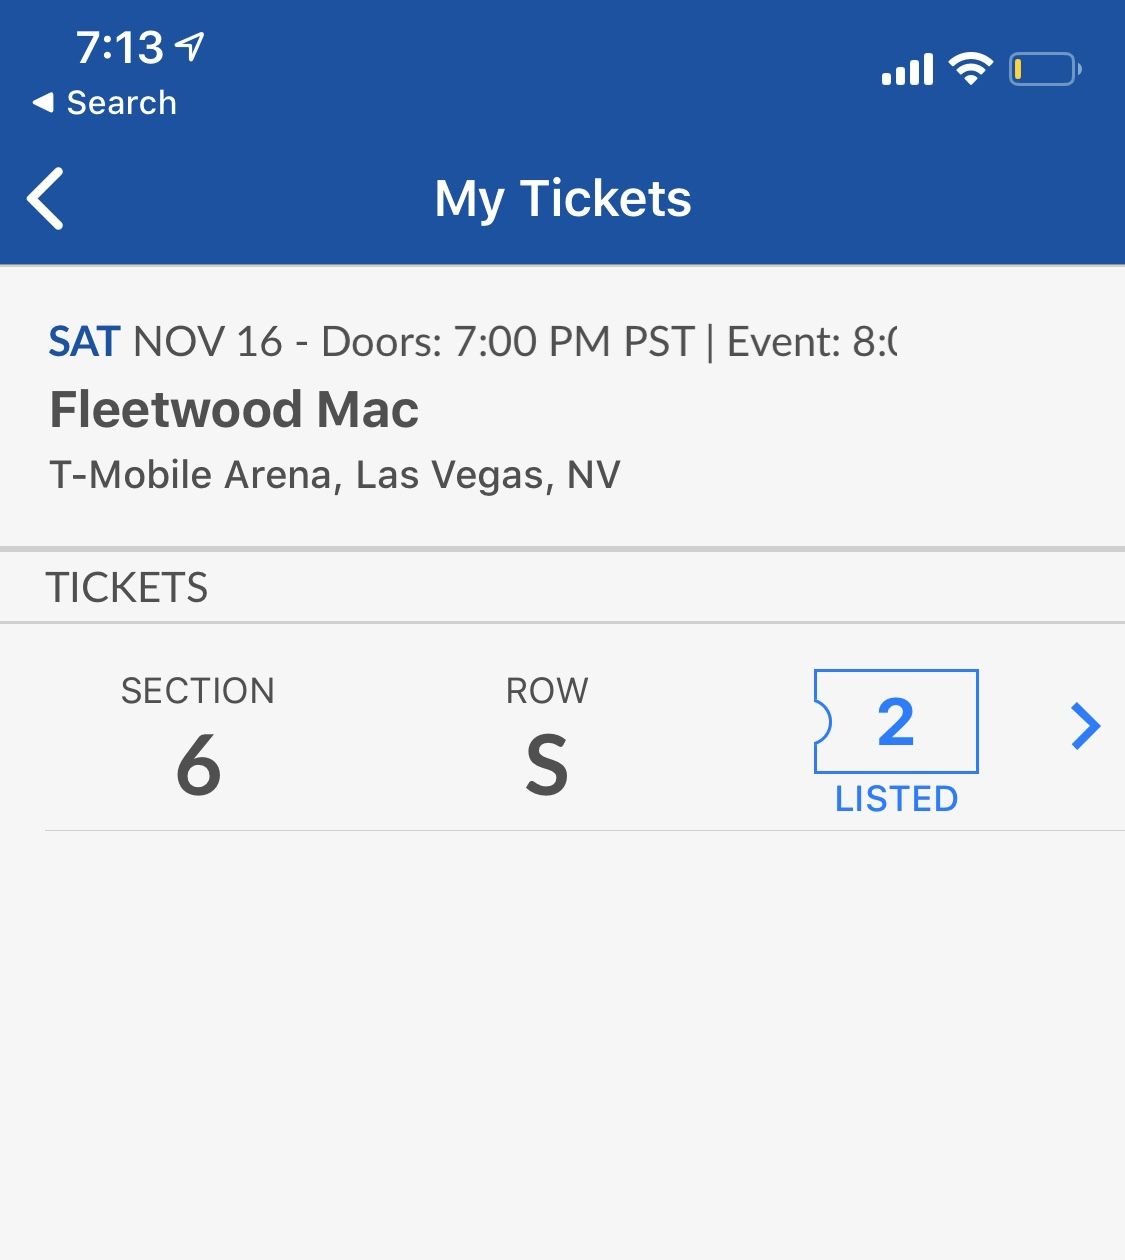 Fleetwood Mac tickets LAS VEGAS 2019